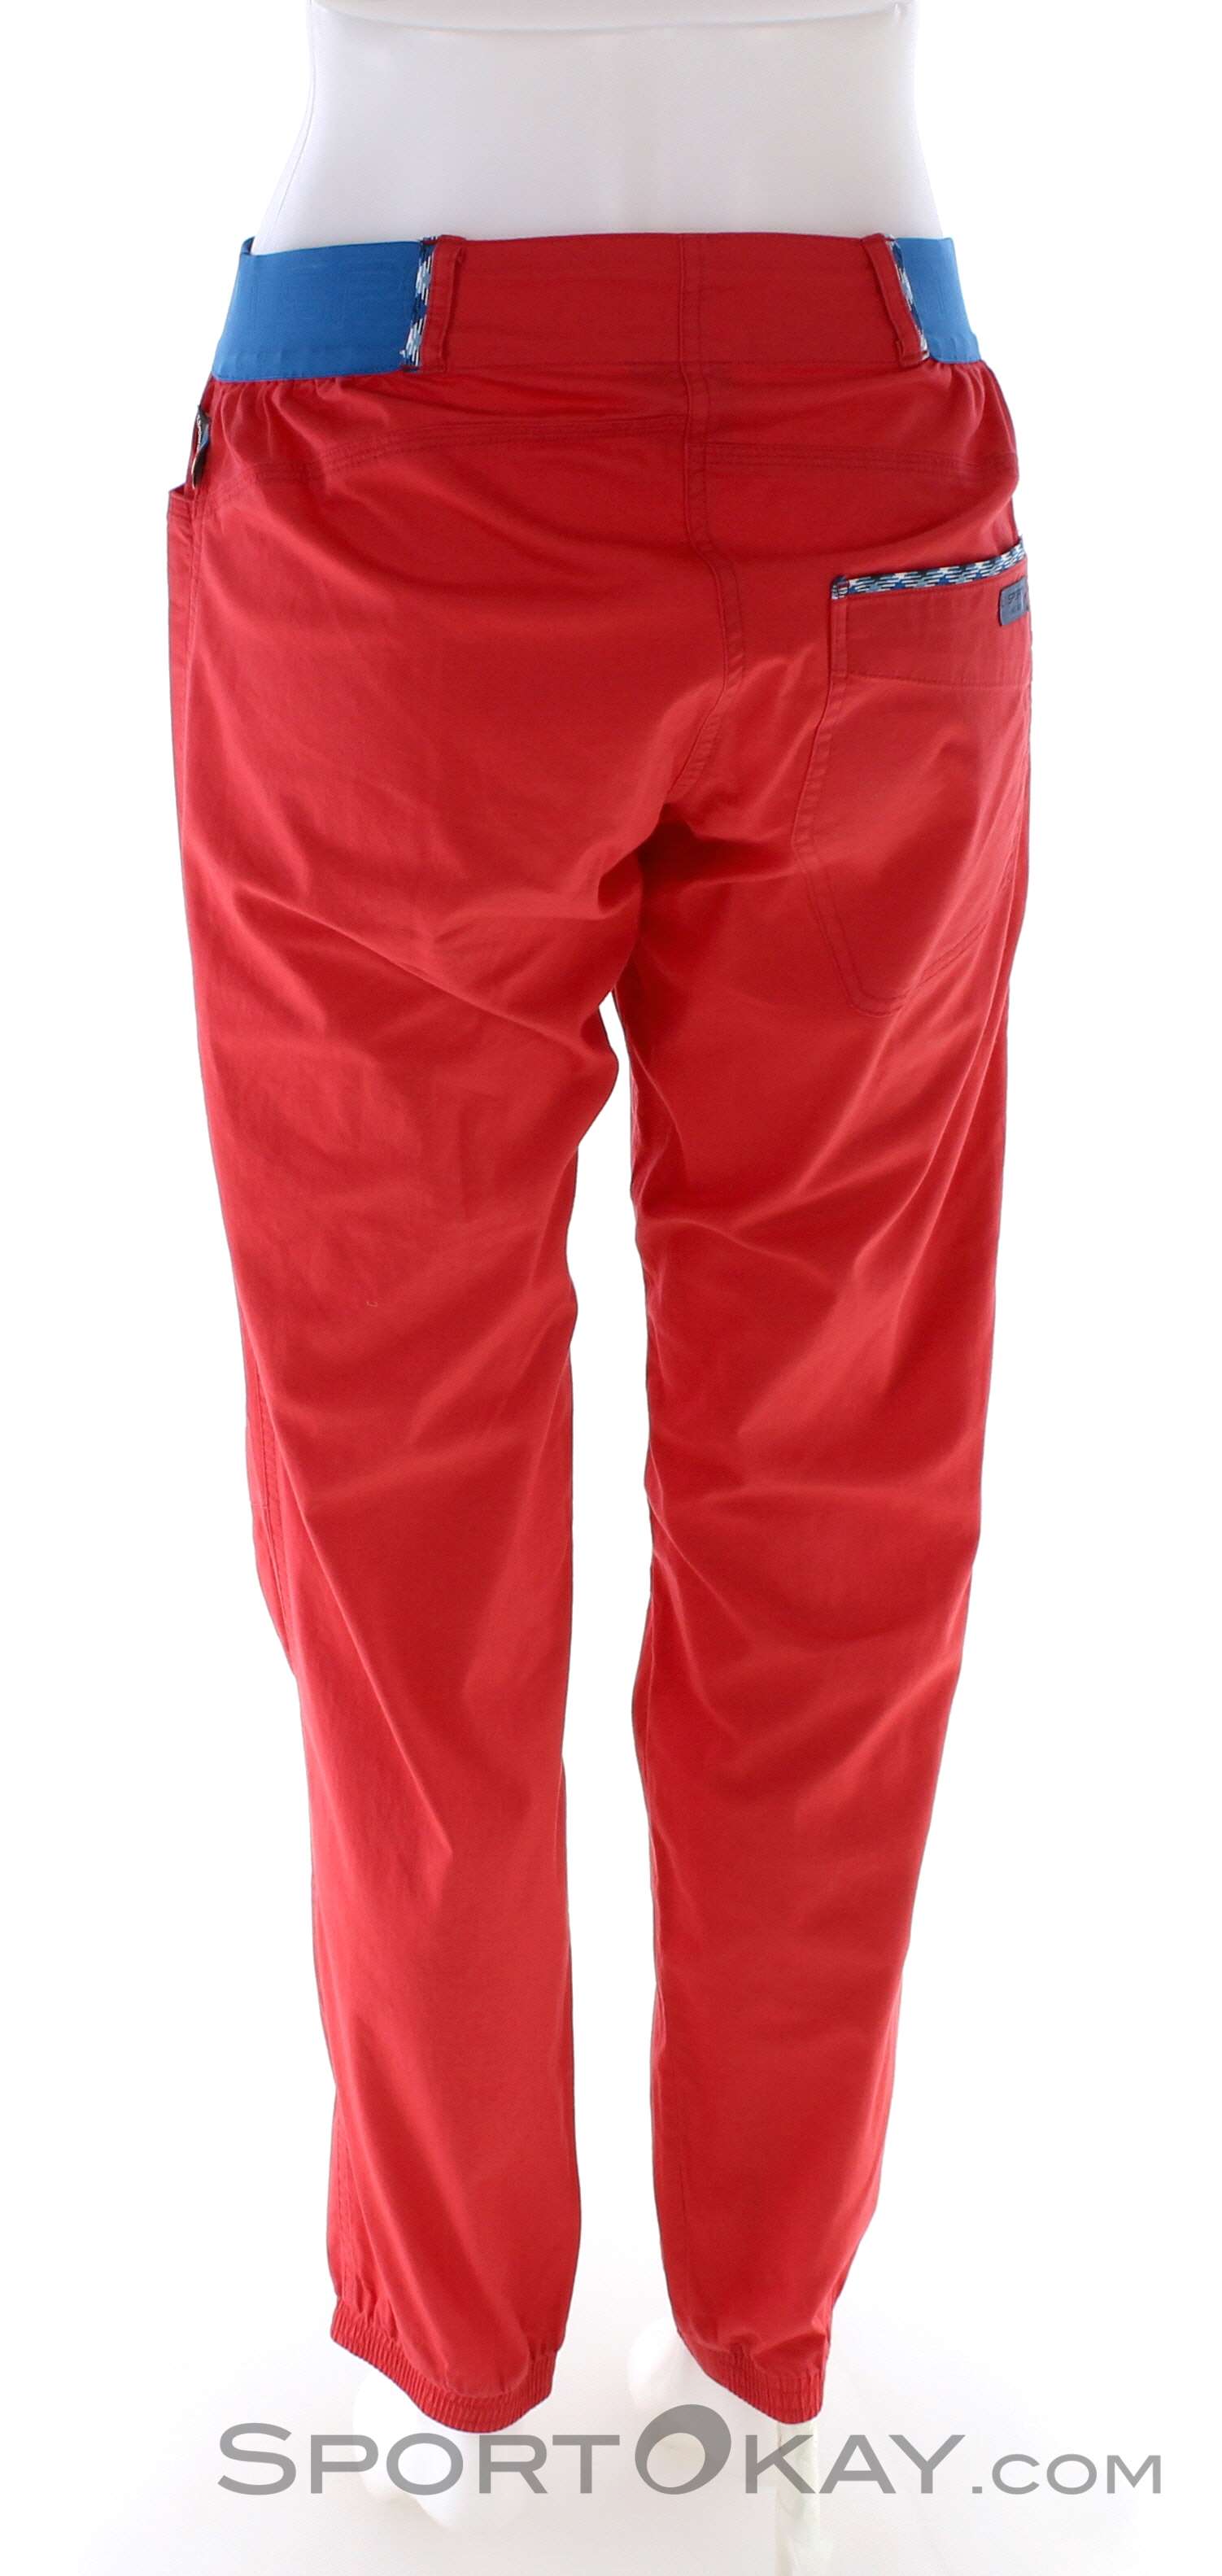 La Sportiva Tundra Donna Pantaloni da Arrampicata - Pantaloni e  pantaloncini - Abbigliamento da arrampicata - Arrampicata - Tutti